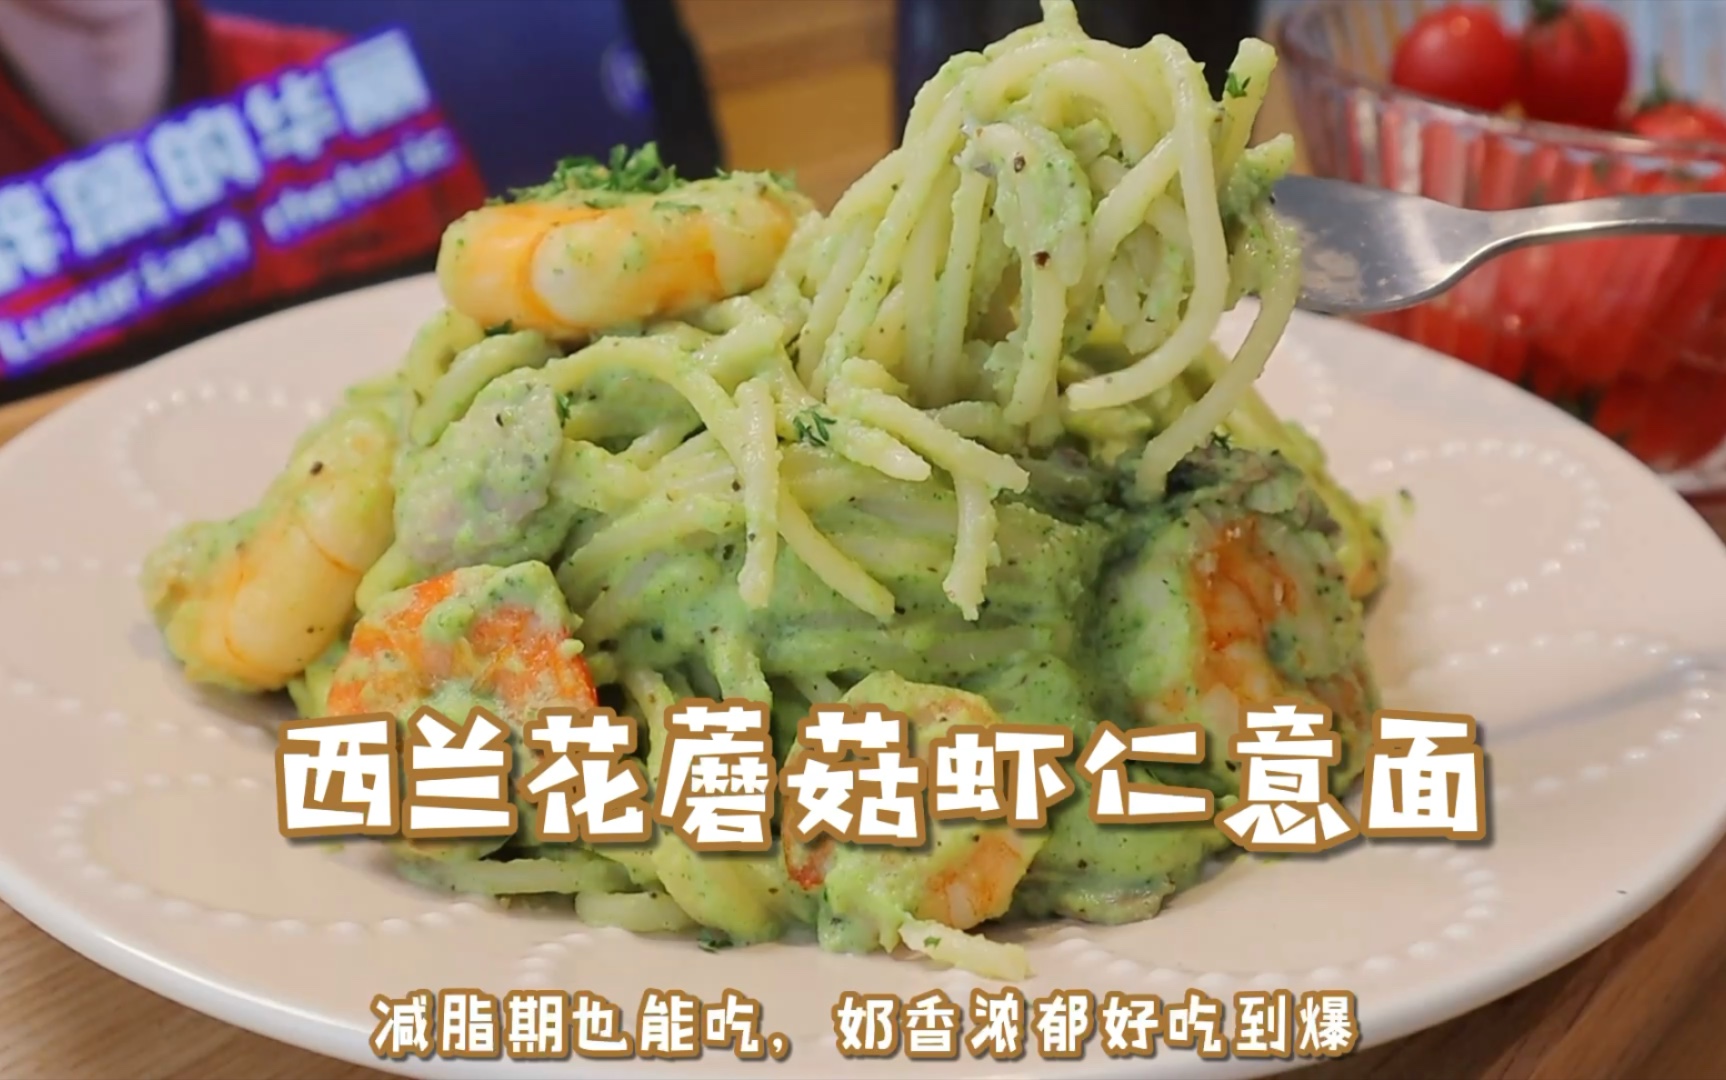 美食 第84篇 Shrimp Broccoli in Garlic Sauce 蒜香西兰花炒虾 - 知乎